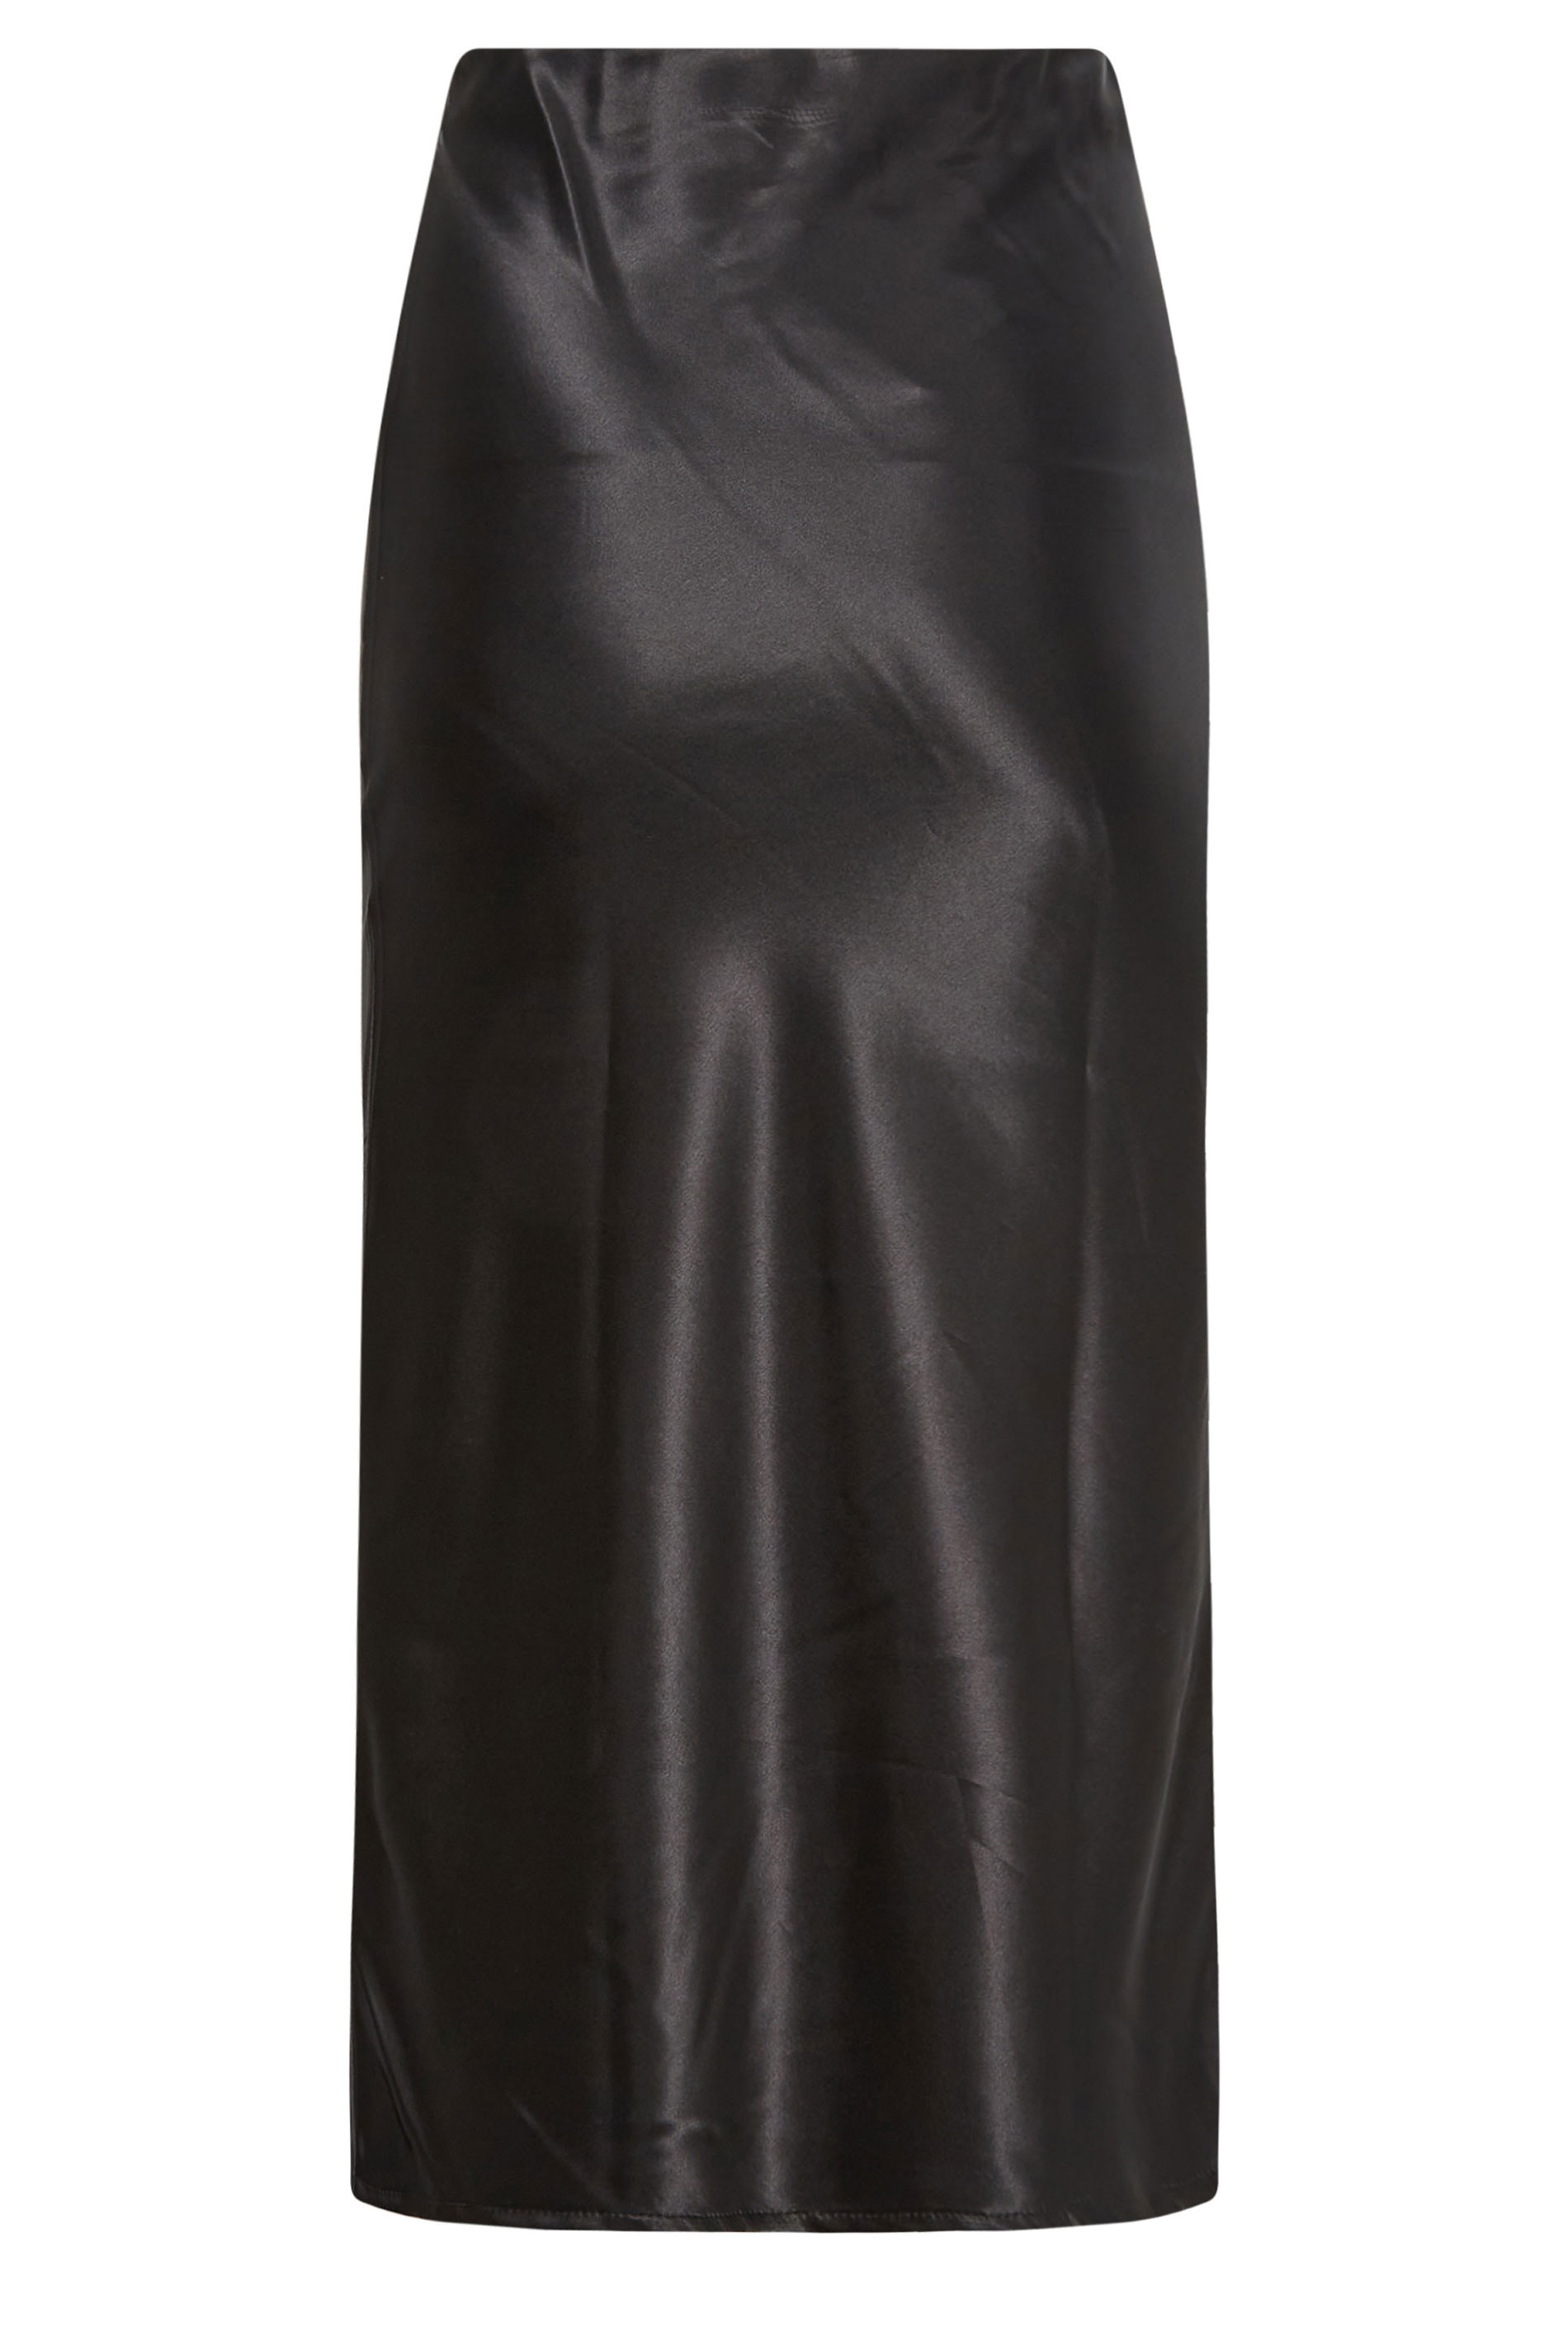 PixieGirl Black Satin Midaxi Skirt | PixieGirl